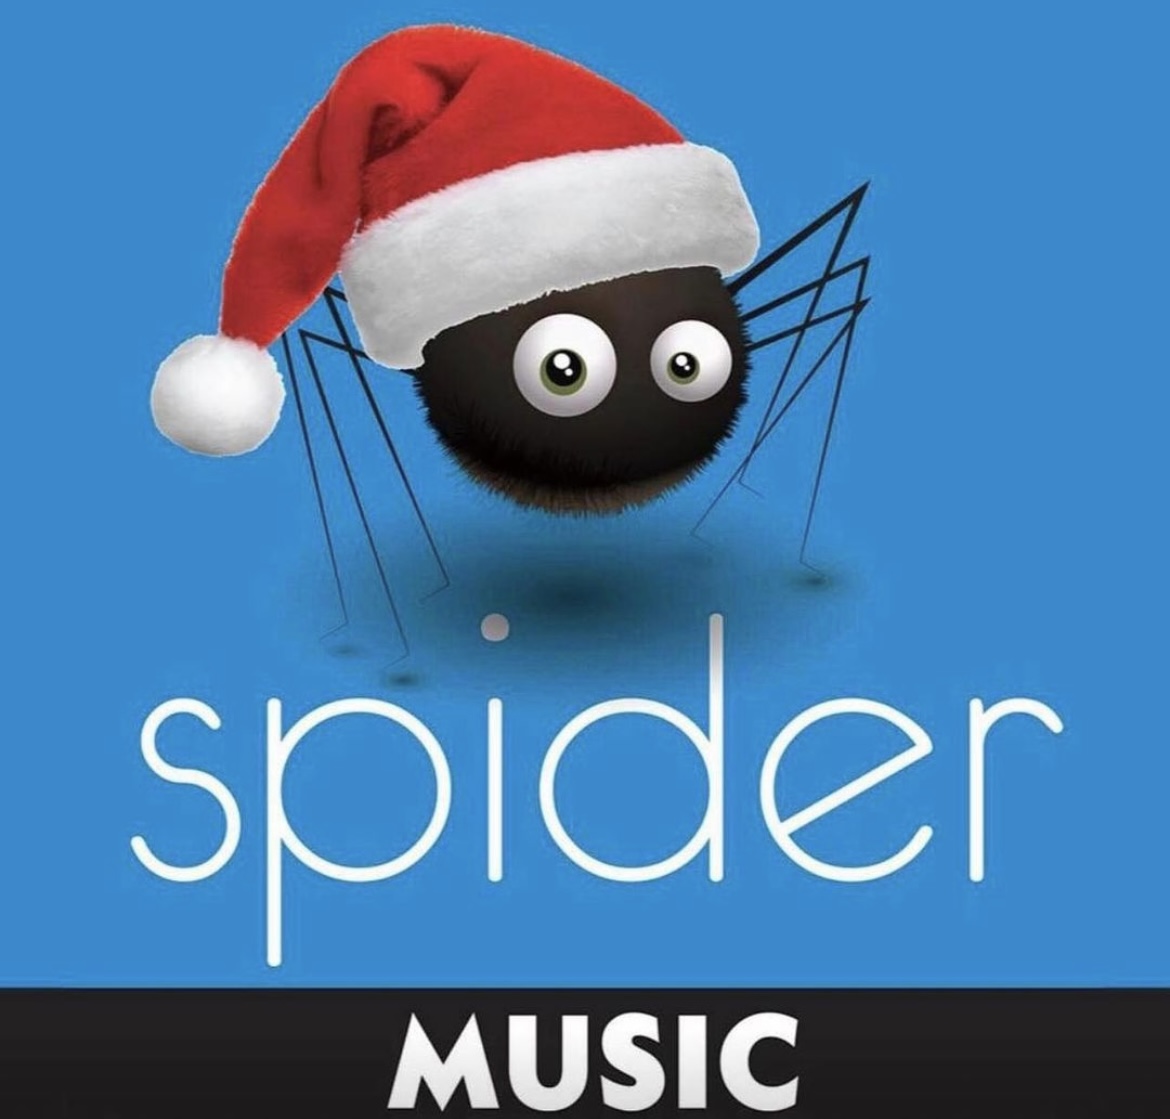 H Spider Music εύχεται Καλά Χριστούγεννα σε όλους, συντροφιά με Ευαγγελία Κοζώνη feat Βασίλης Σπηλιόπουλος και των DK and the Band !!!! 